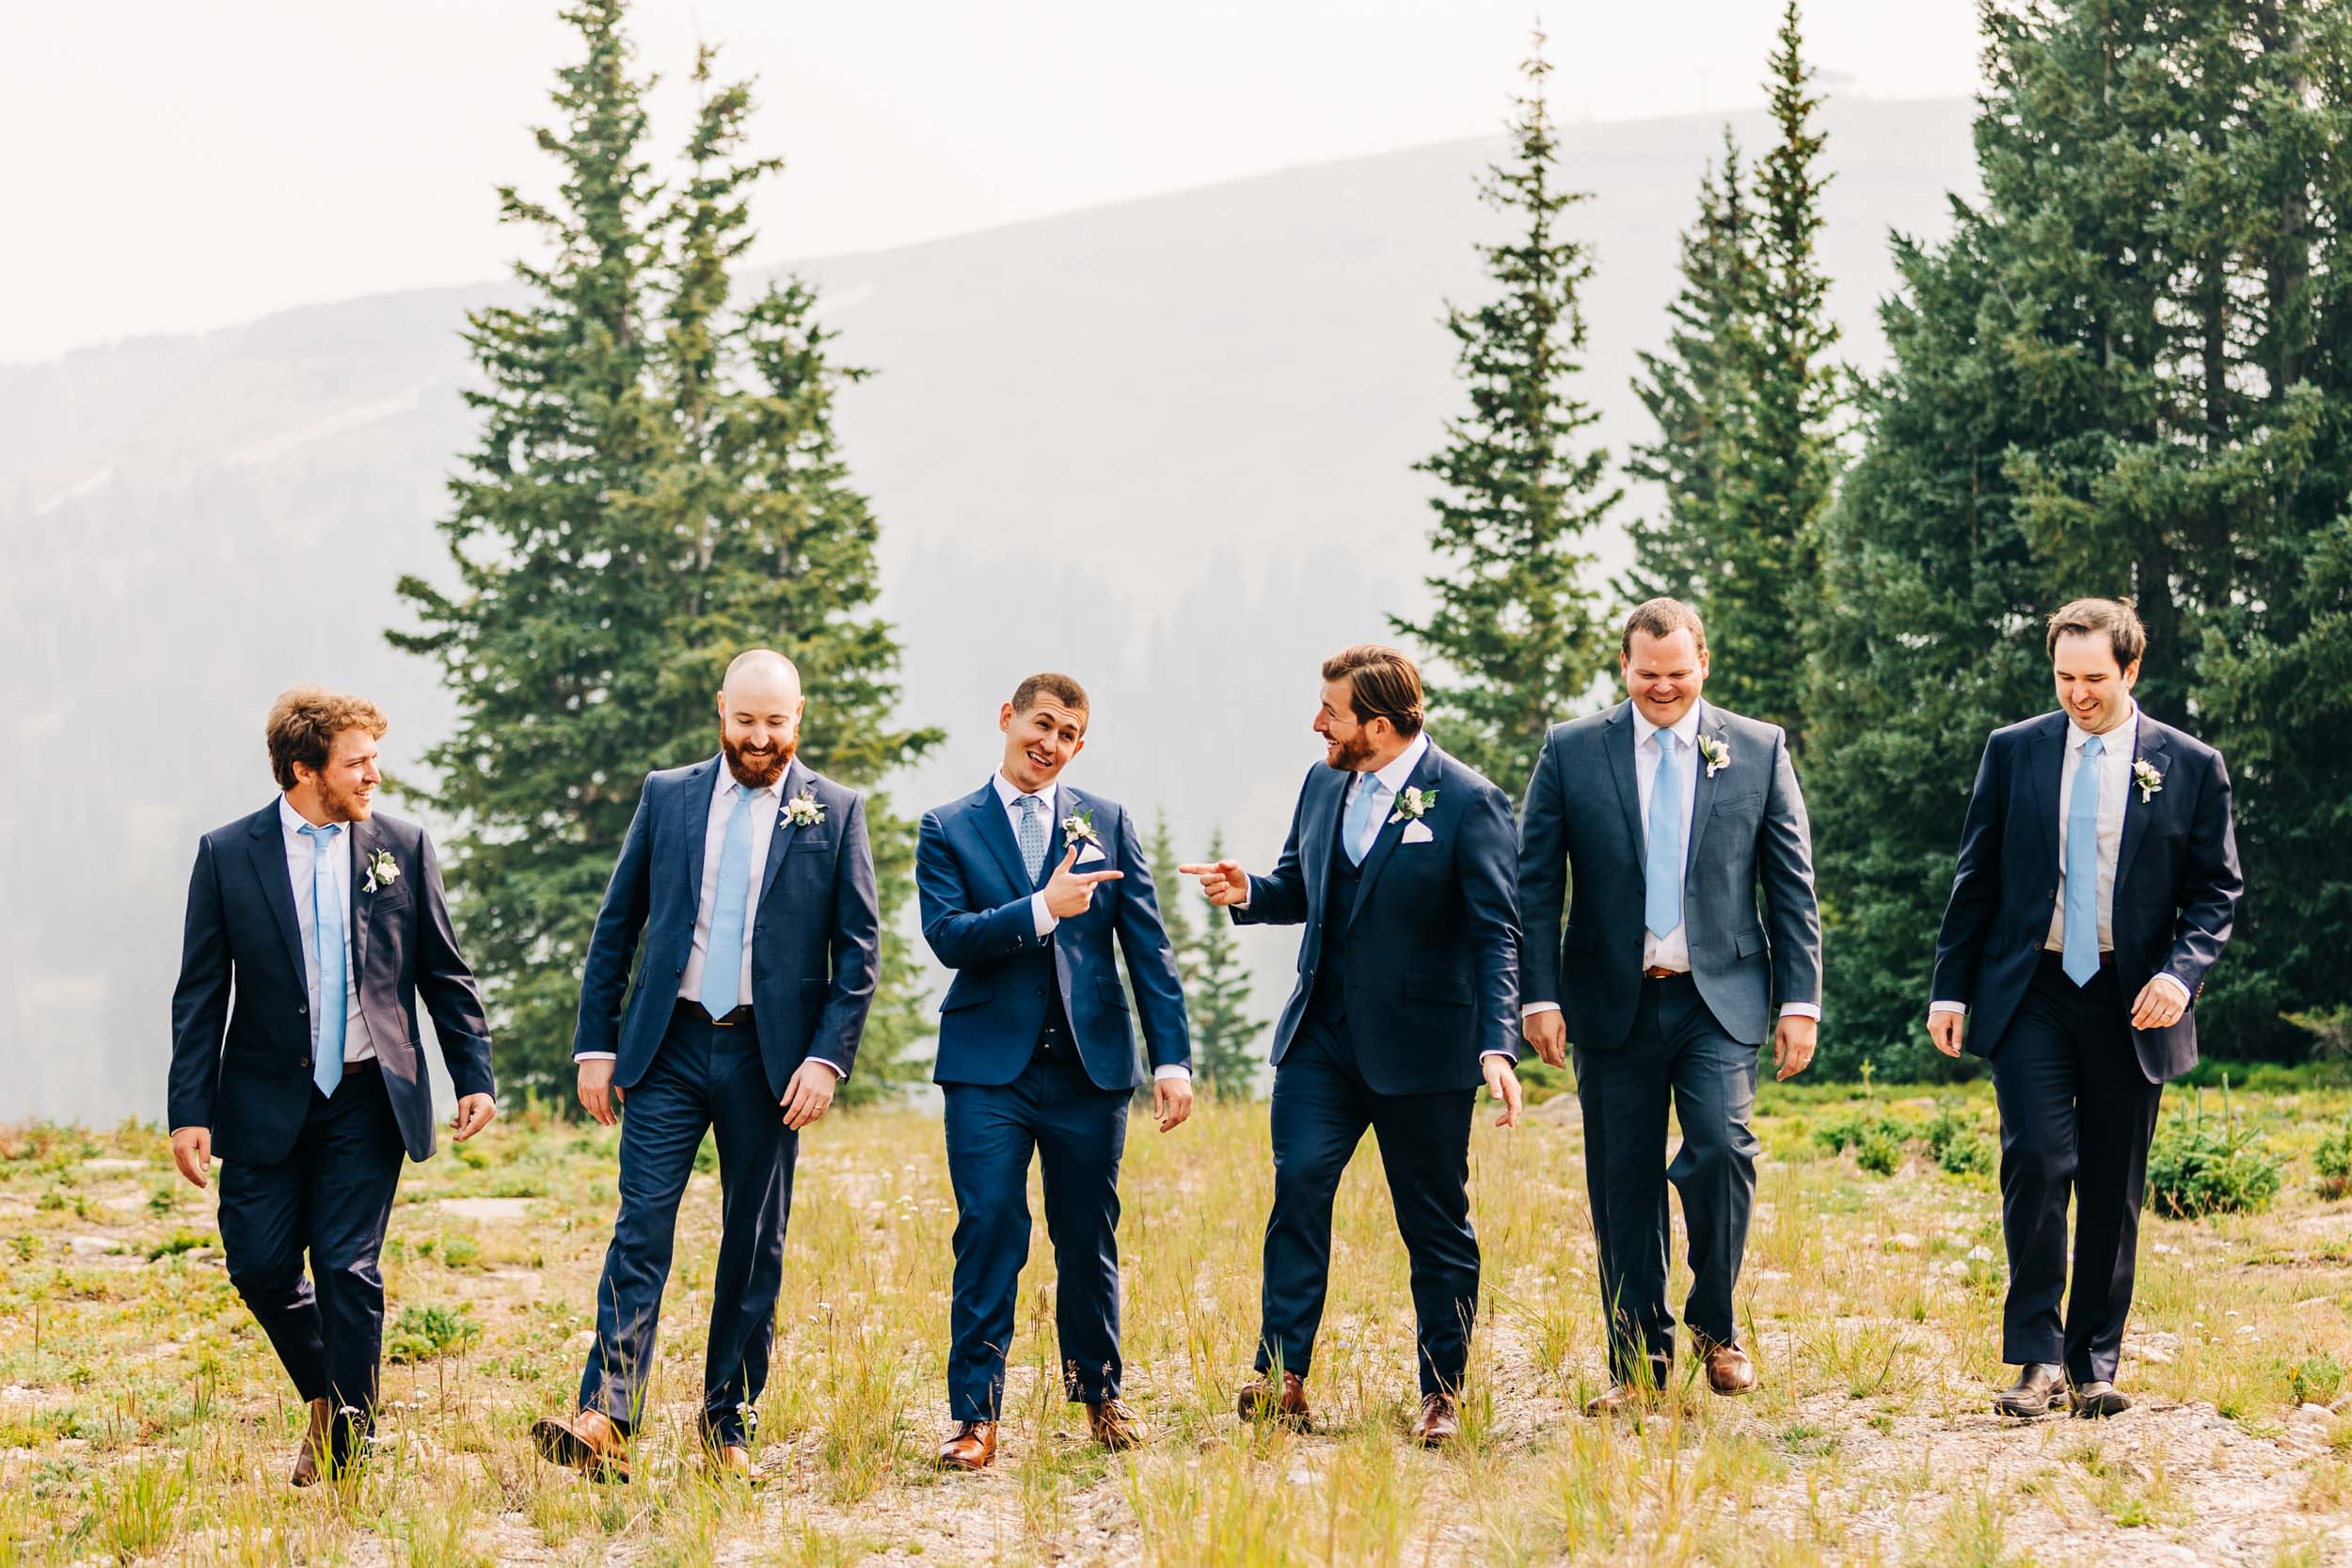 Lunch Rock wedding photos of groomsmen by Shea McGrath Photography Colorado Wedding Photographer